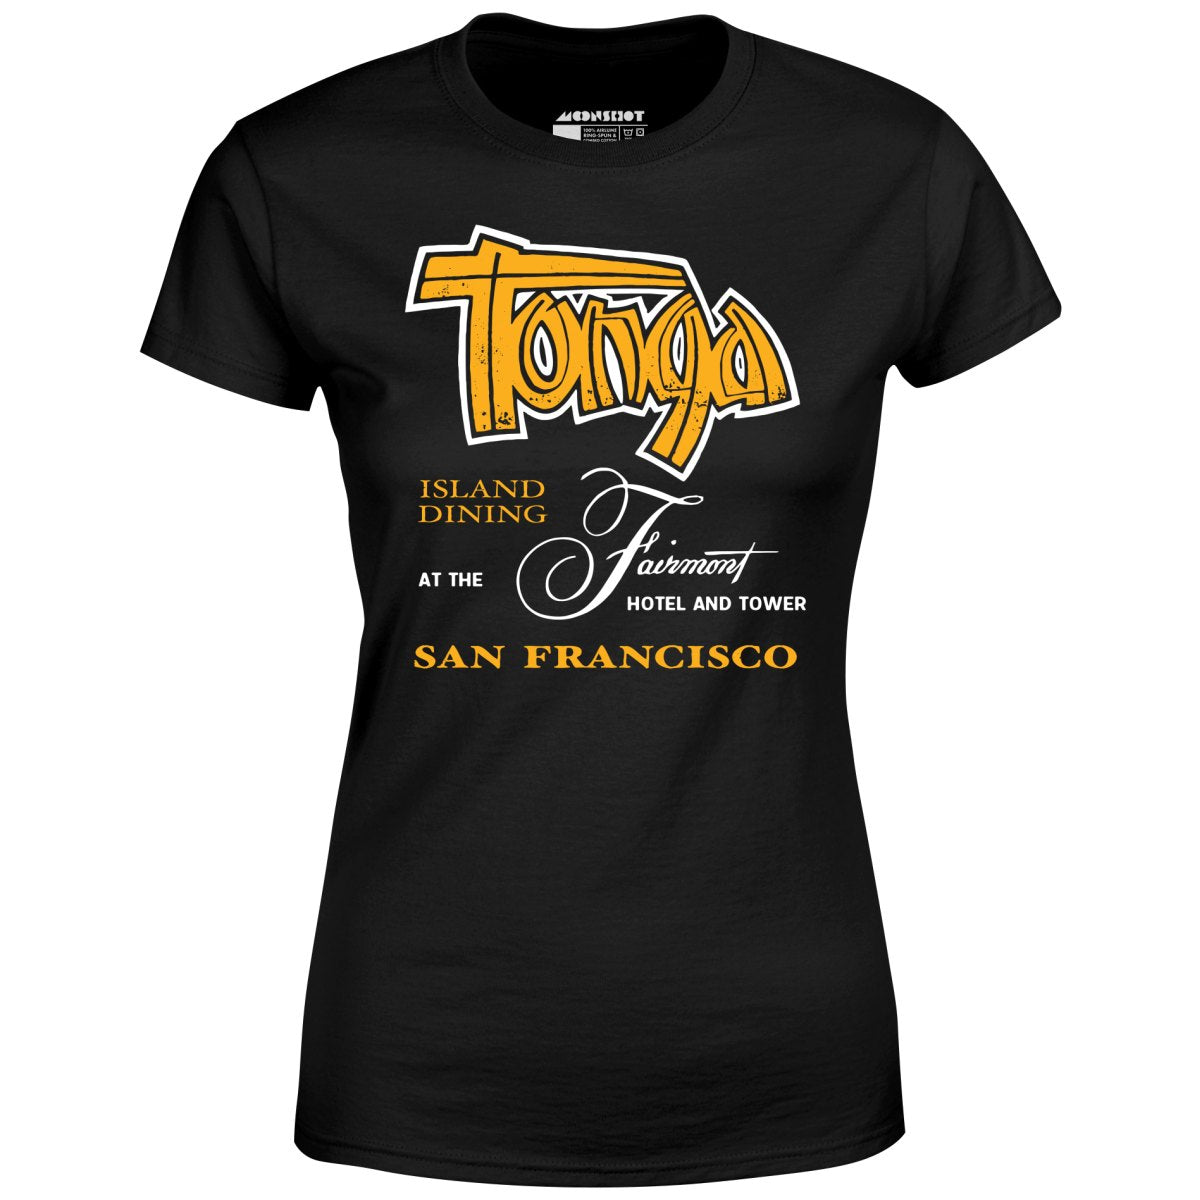 Tonga Room v3 - San Francisco, CA - Vintage Tiki Bar - Women's T-Shirt